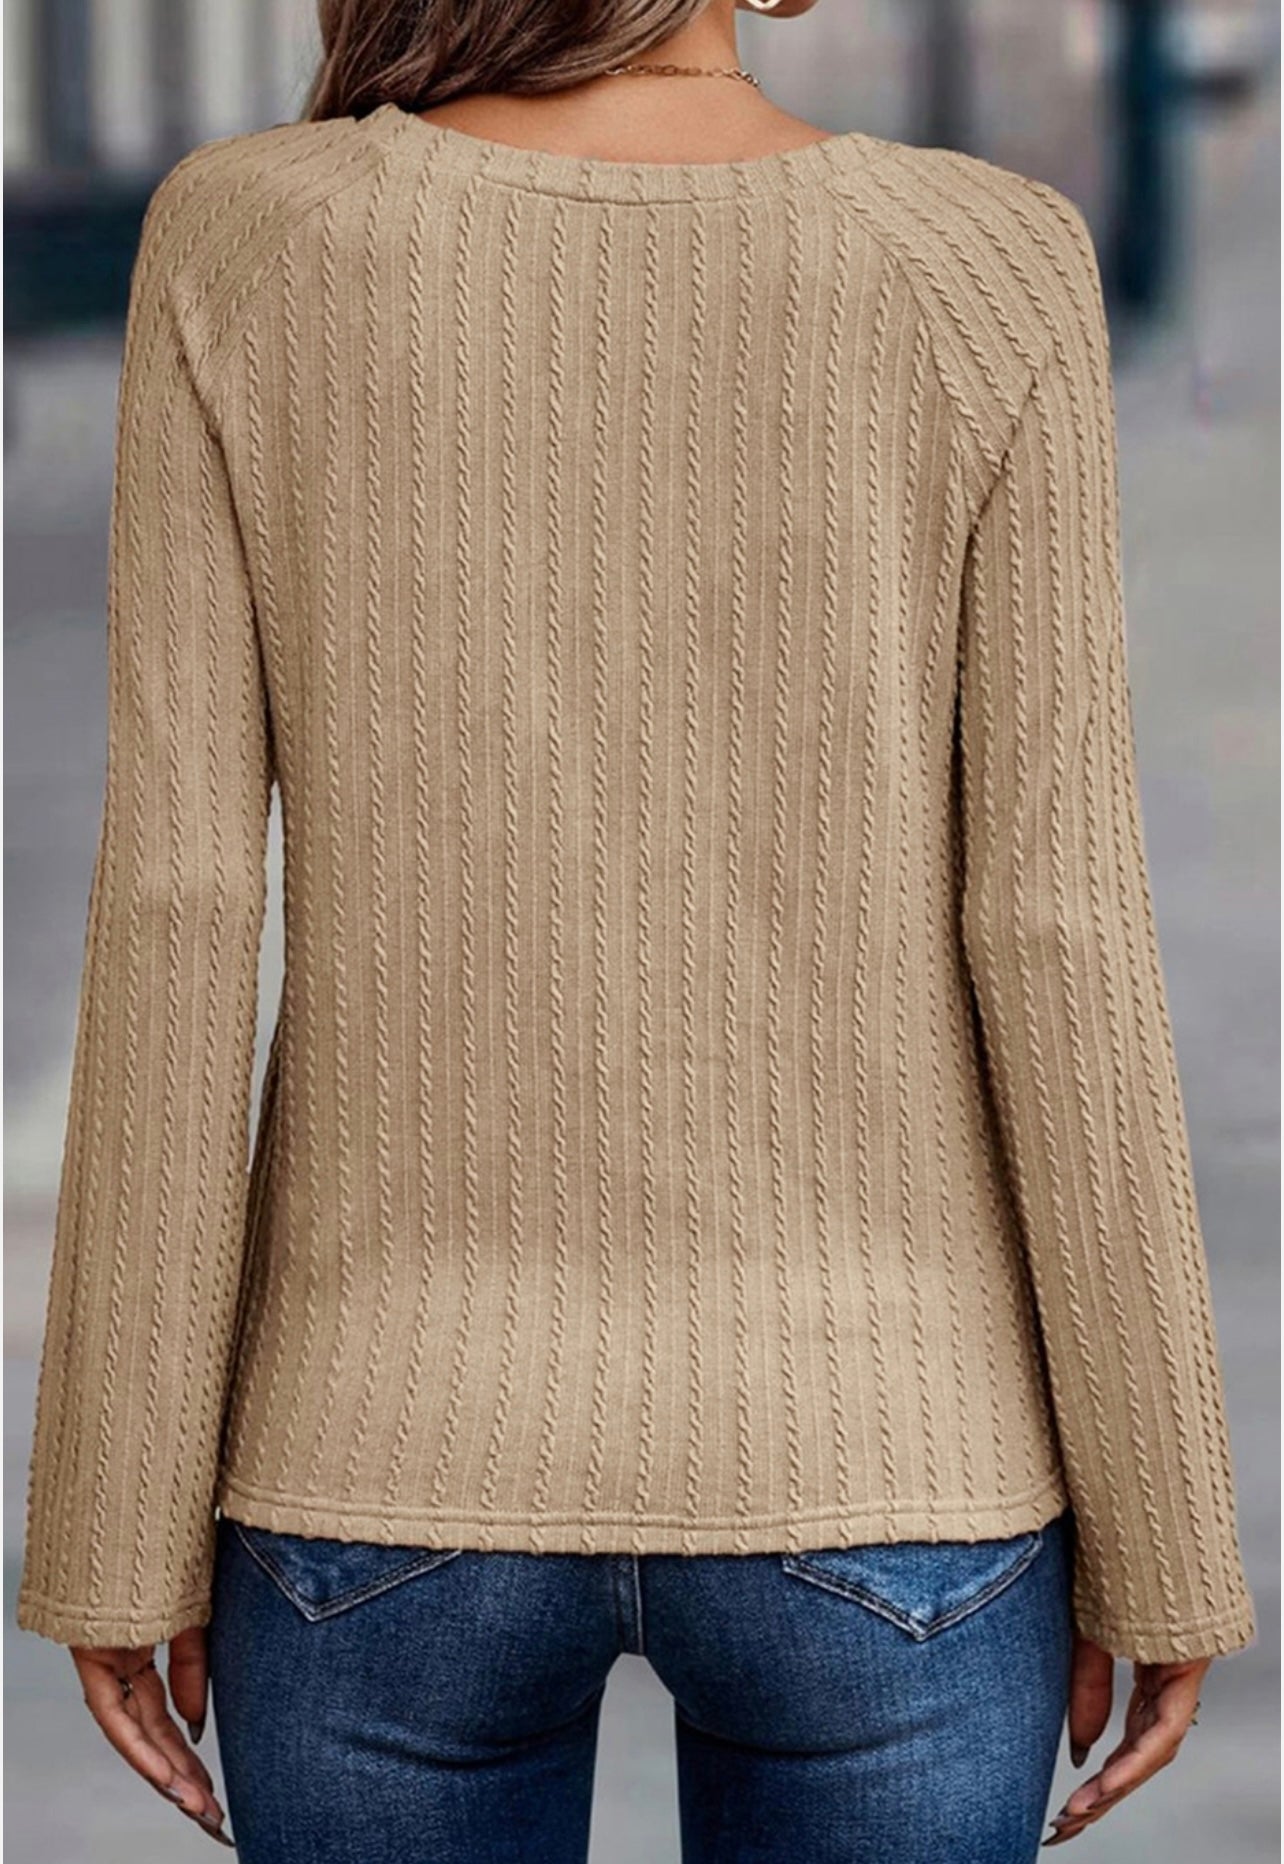 Textured Long Sleeve Knit Top - Regular & Plus